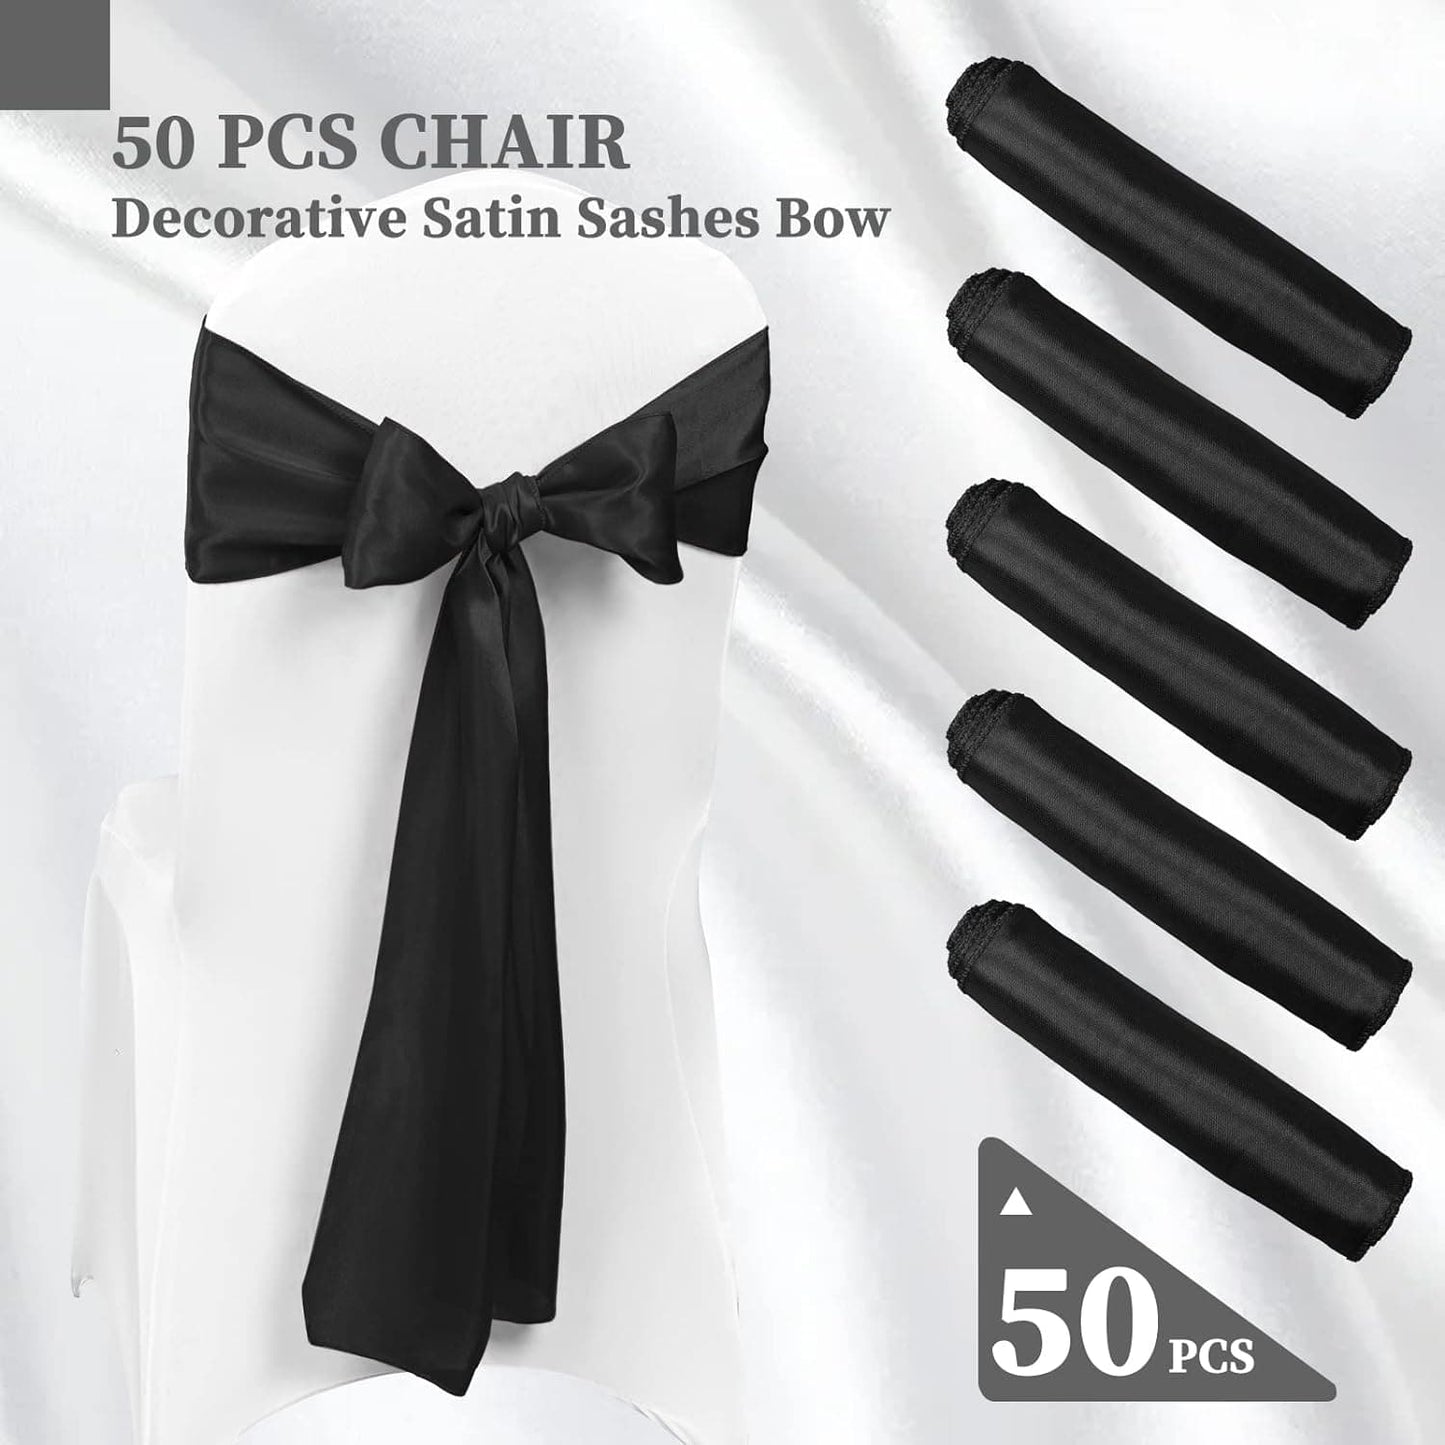 50 PCS Satin Chair Sash ChairWedding